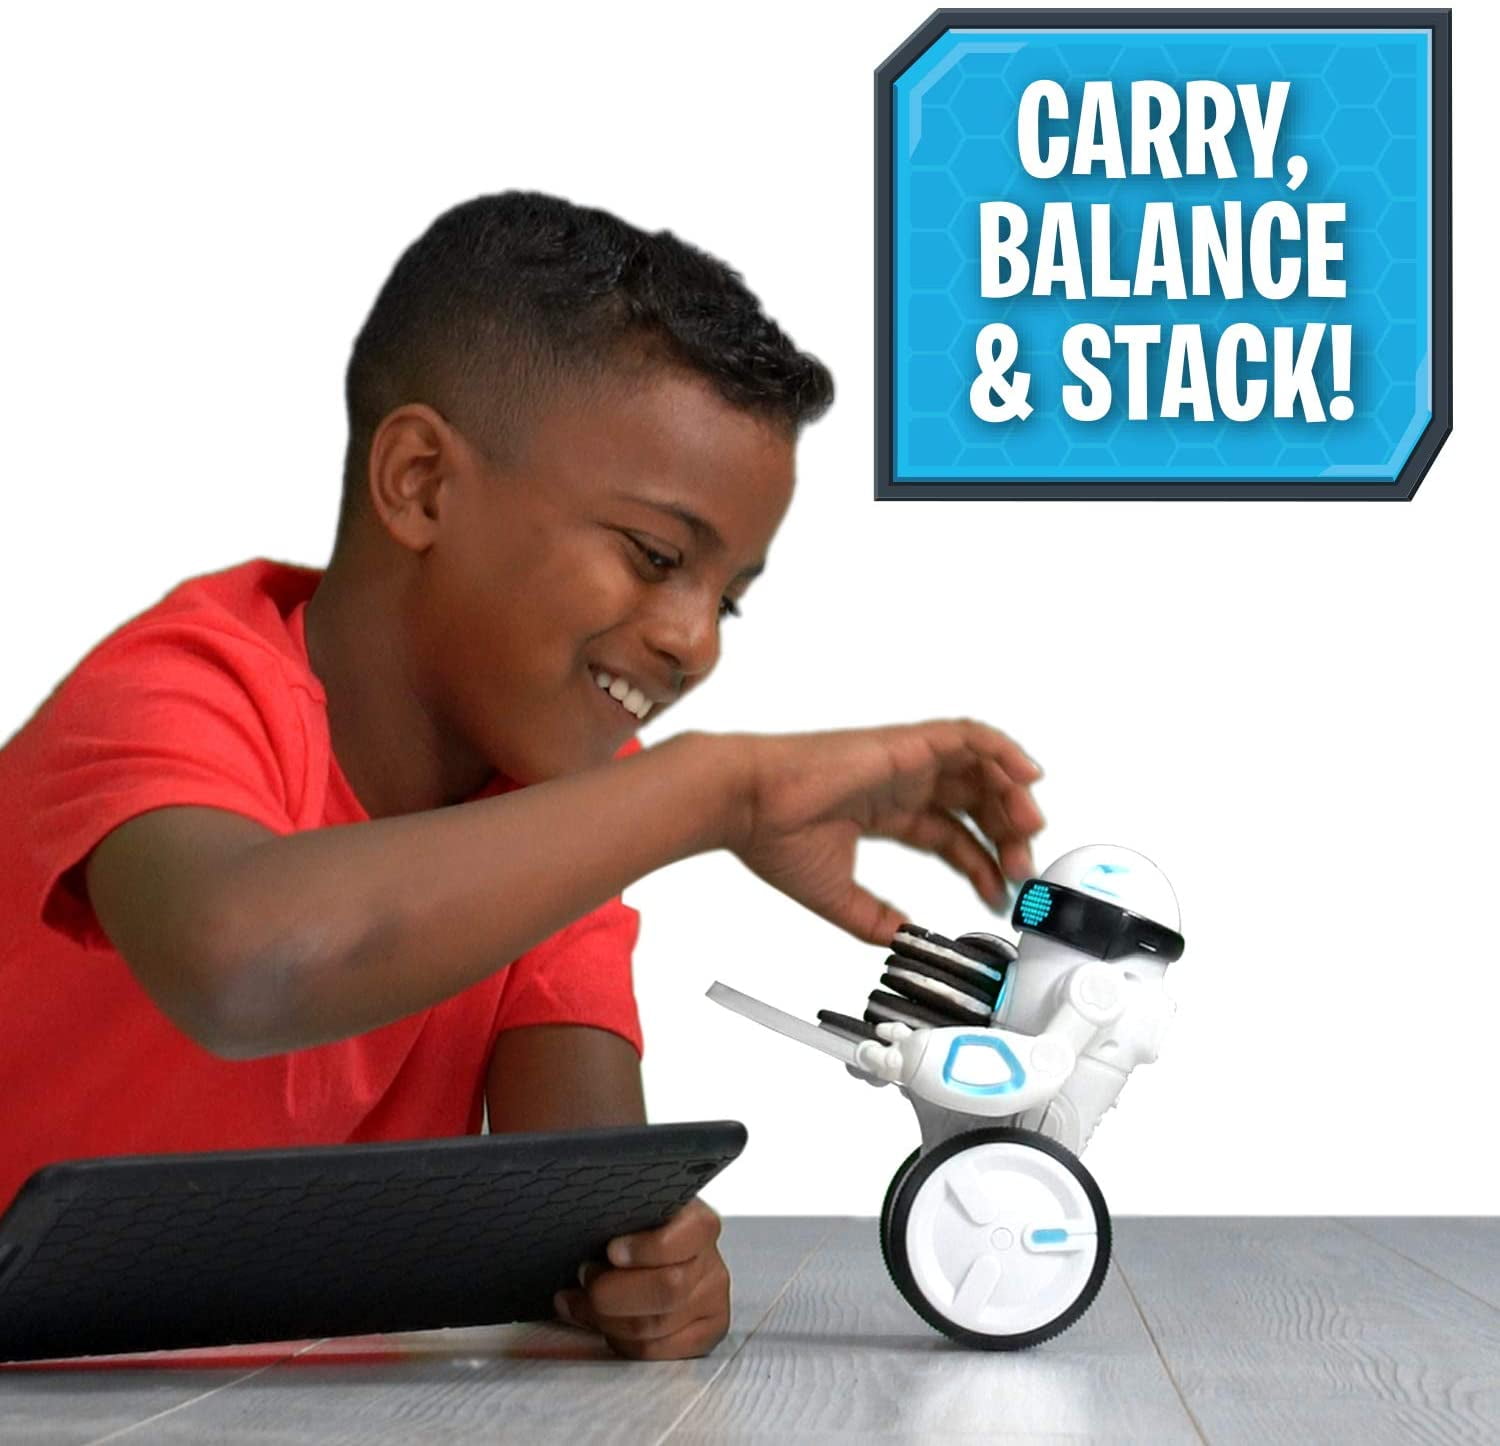 WowWee MiP Arcade - Interactive Self-Balancing Robot - Play App 